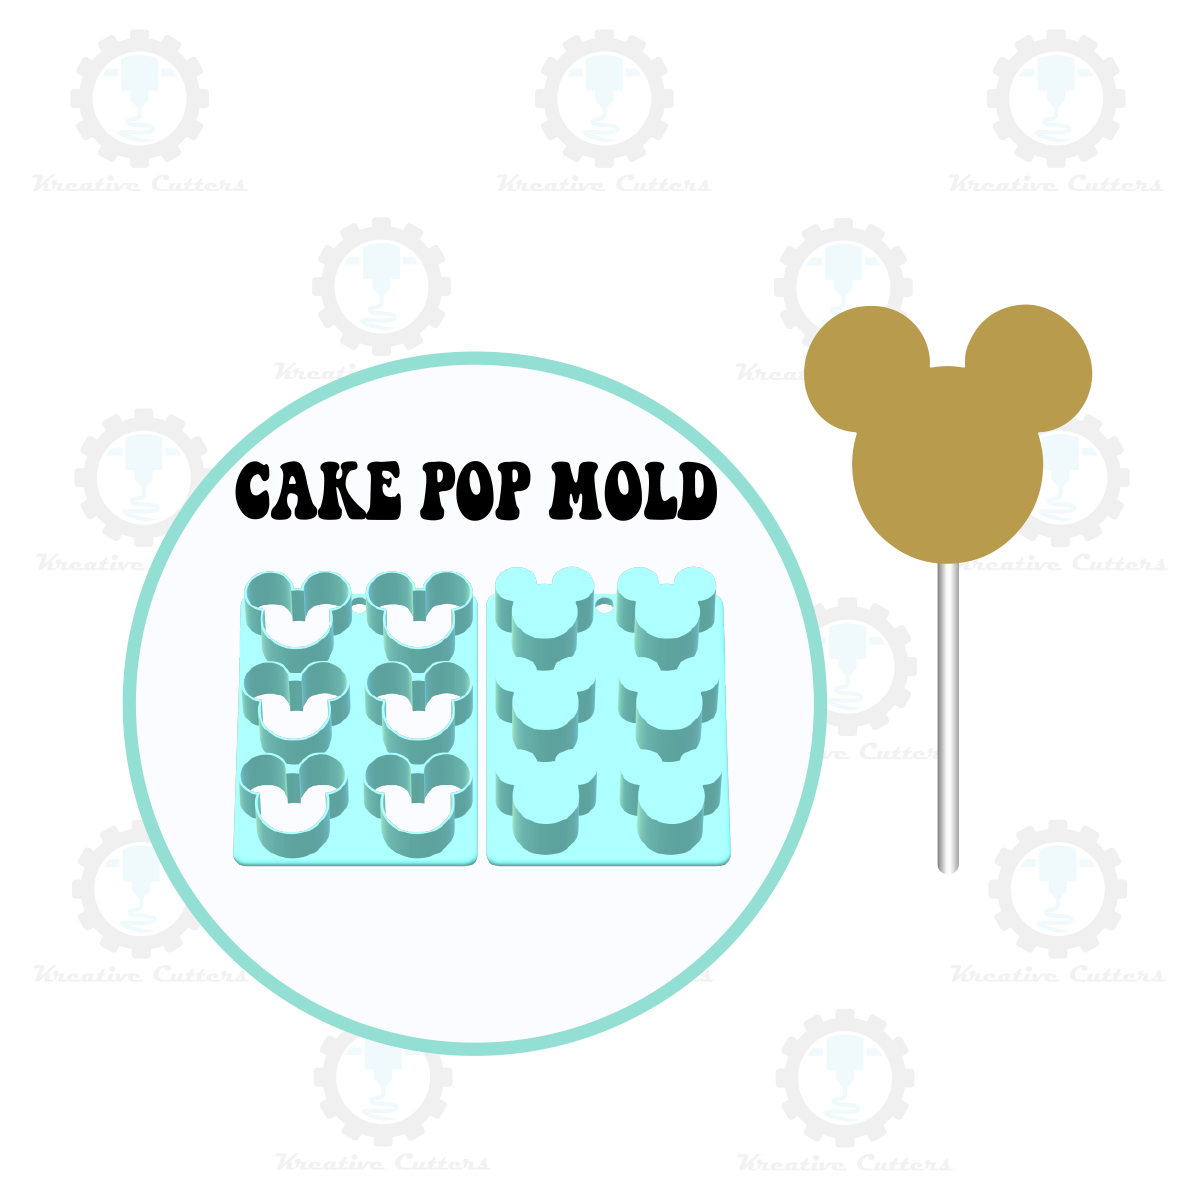 Mouse Cake Pop Mold | Single or Multi-popper